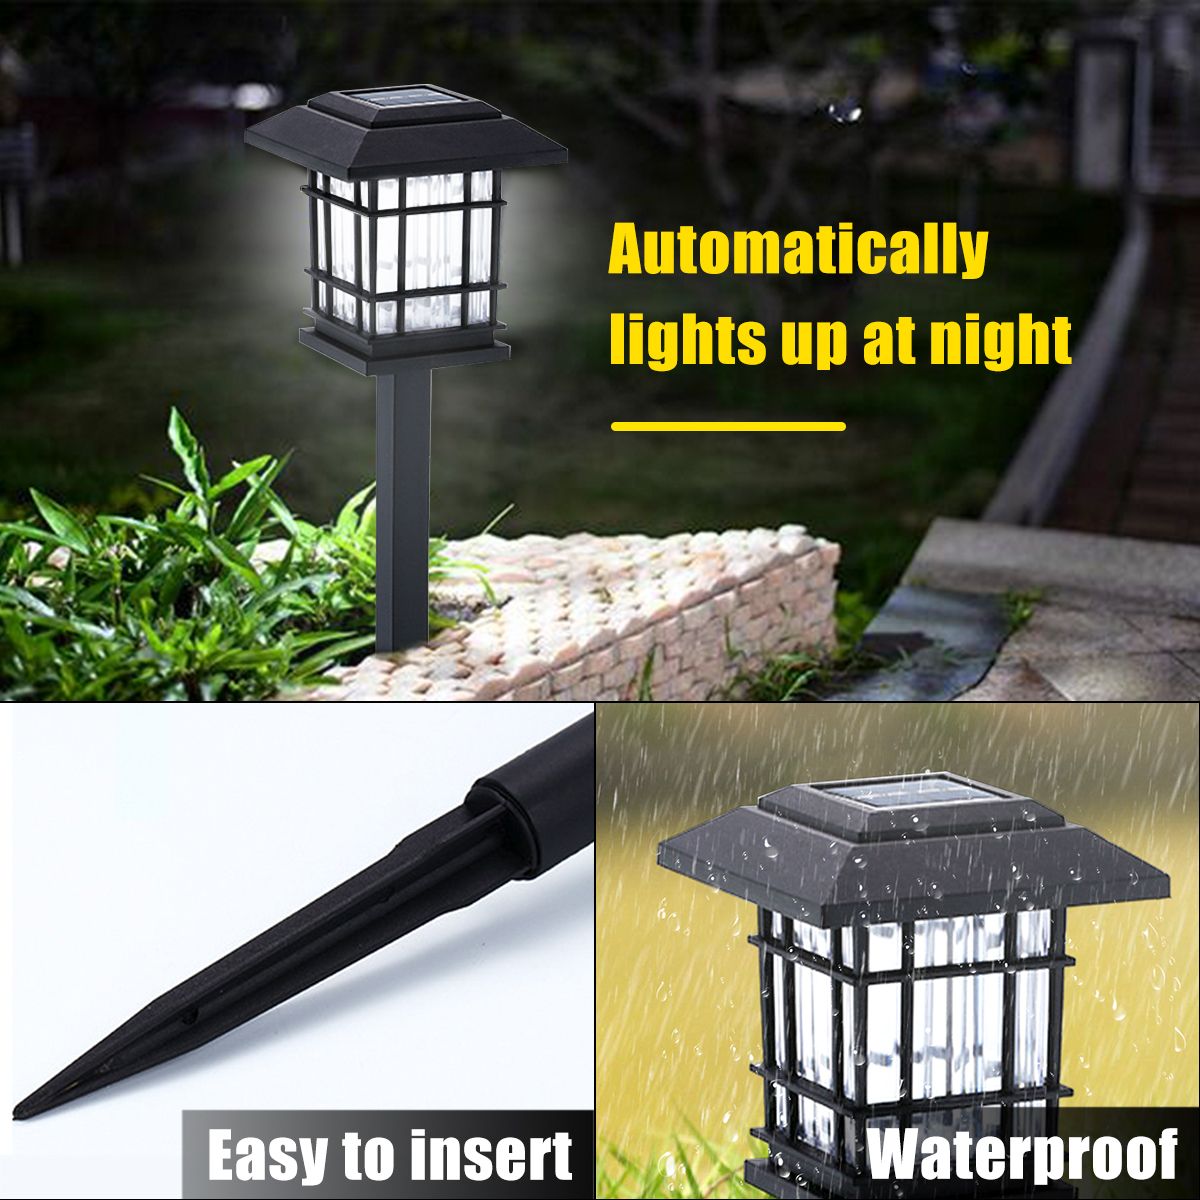 2PCS-Auto-Sensing-LED-Solar-Lamp-Garden-Lamps-For-Outdoor-Patio-Lawn-1755204